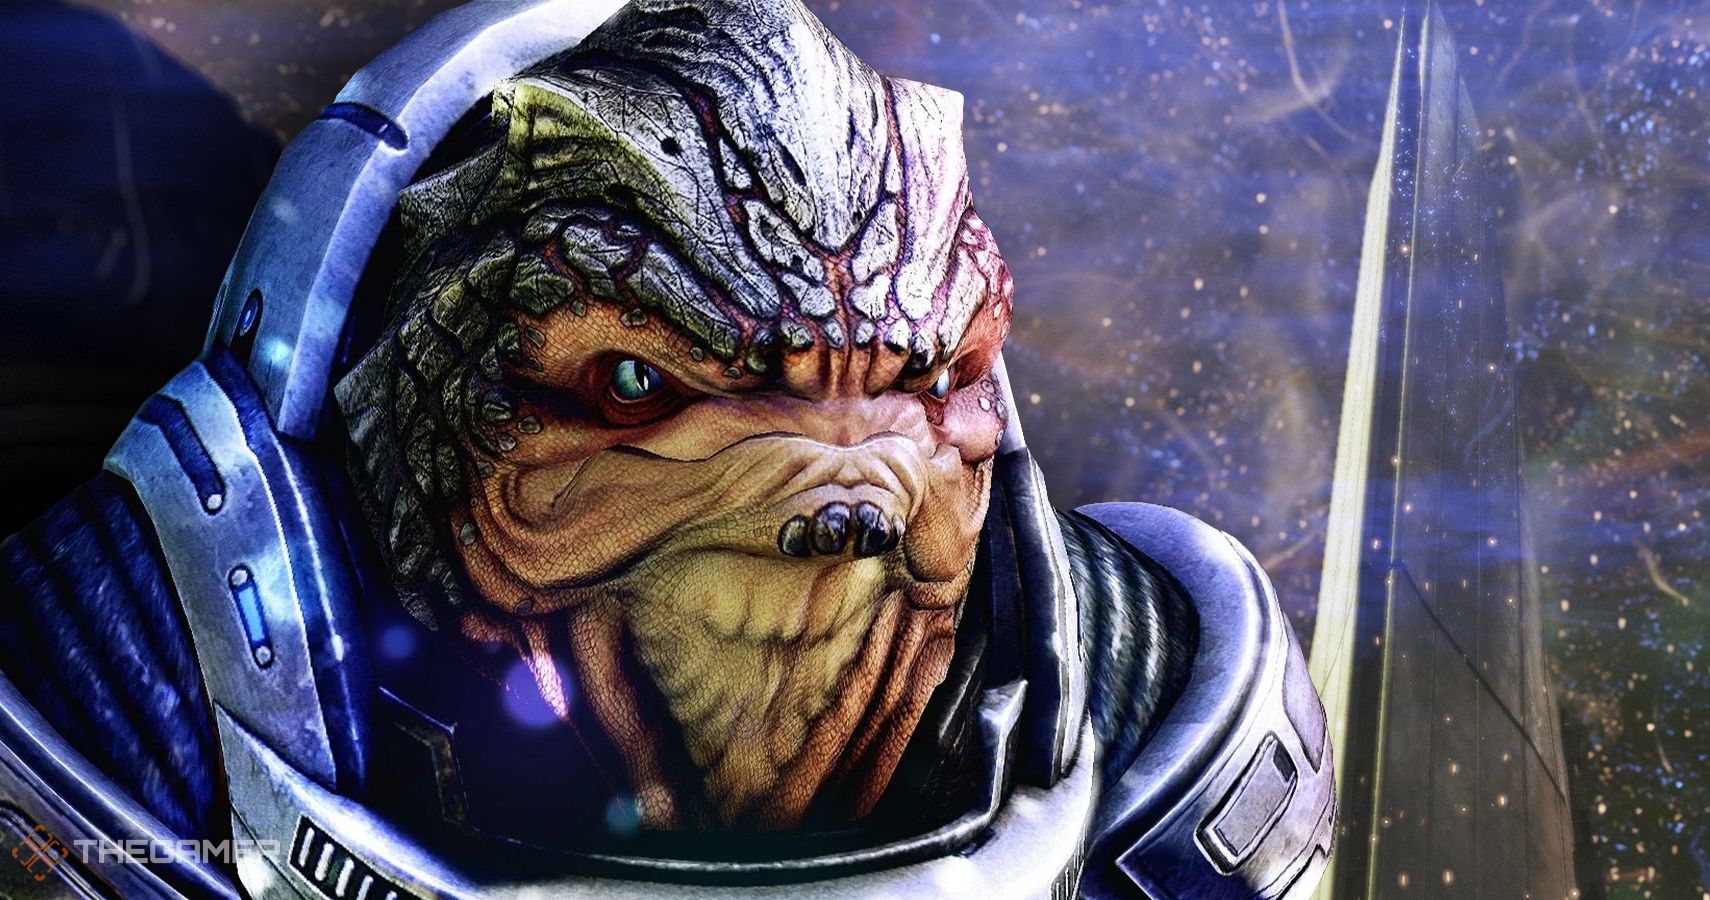 Krogan named &quot;Grunt&quot; from Mass Effect 2